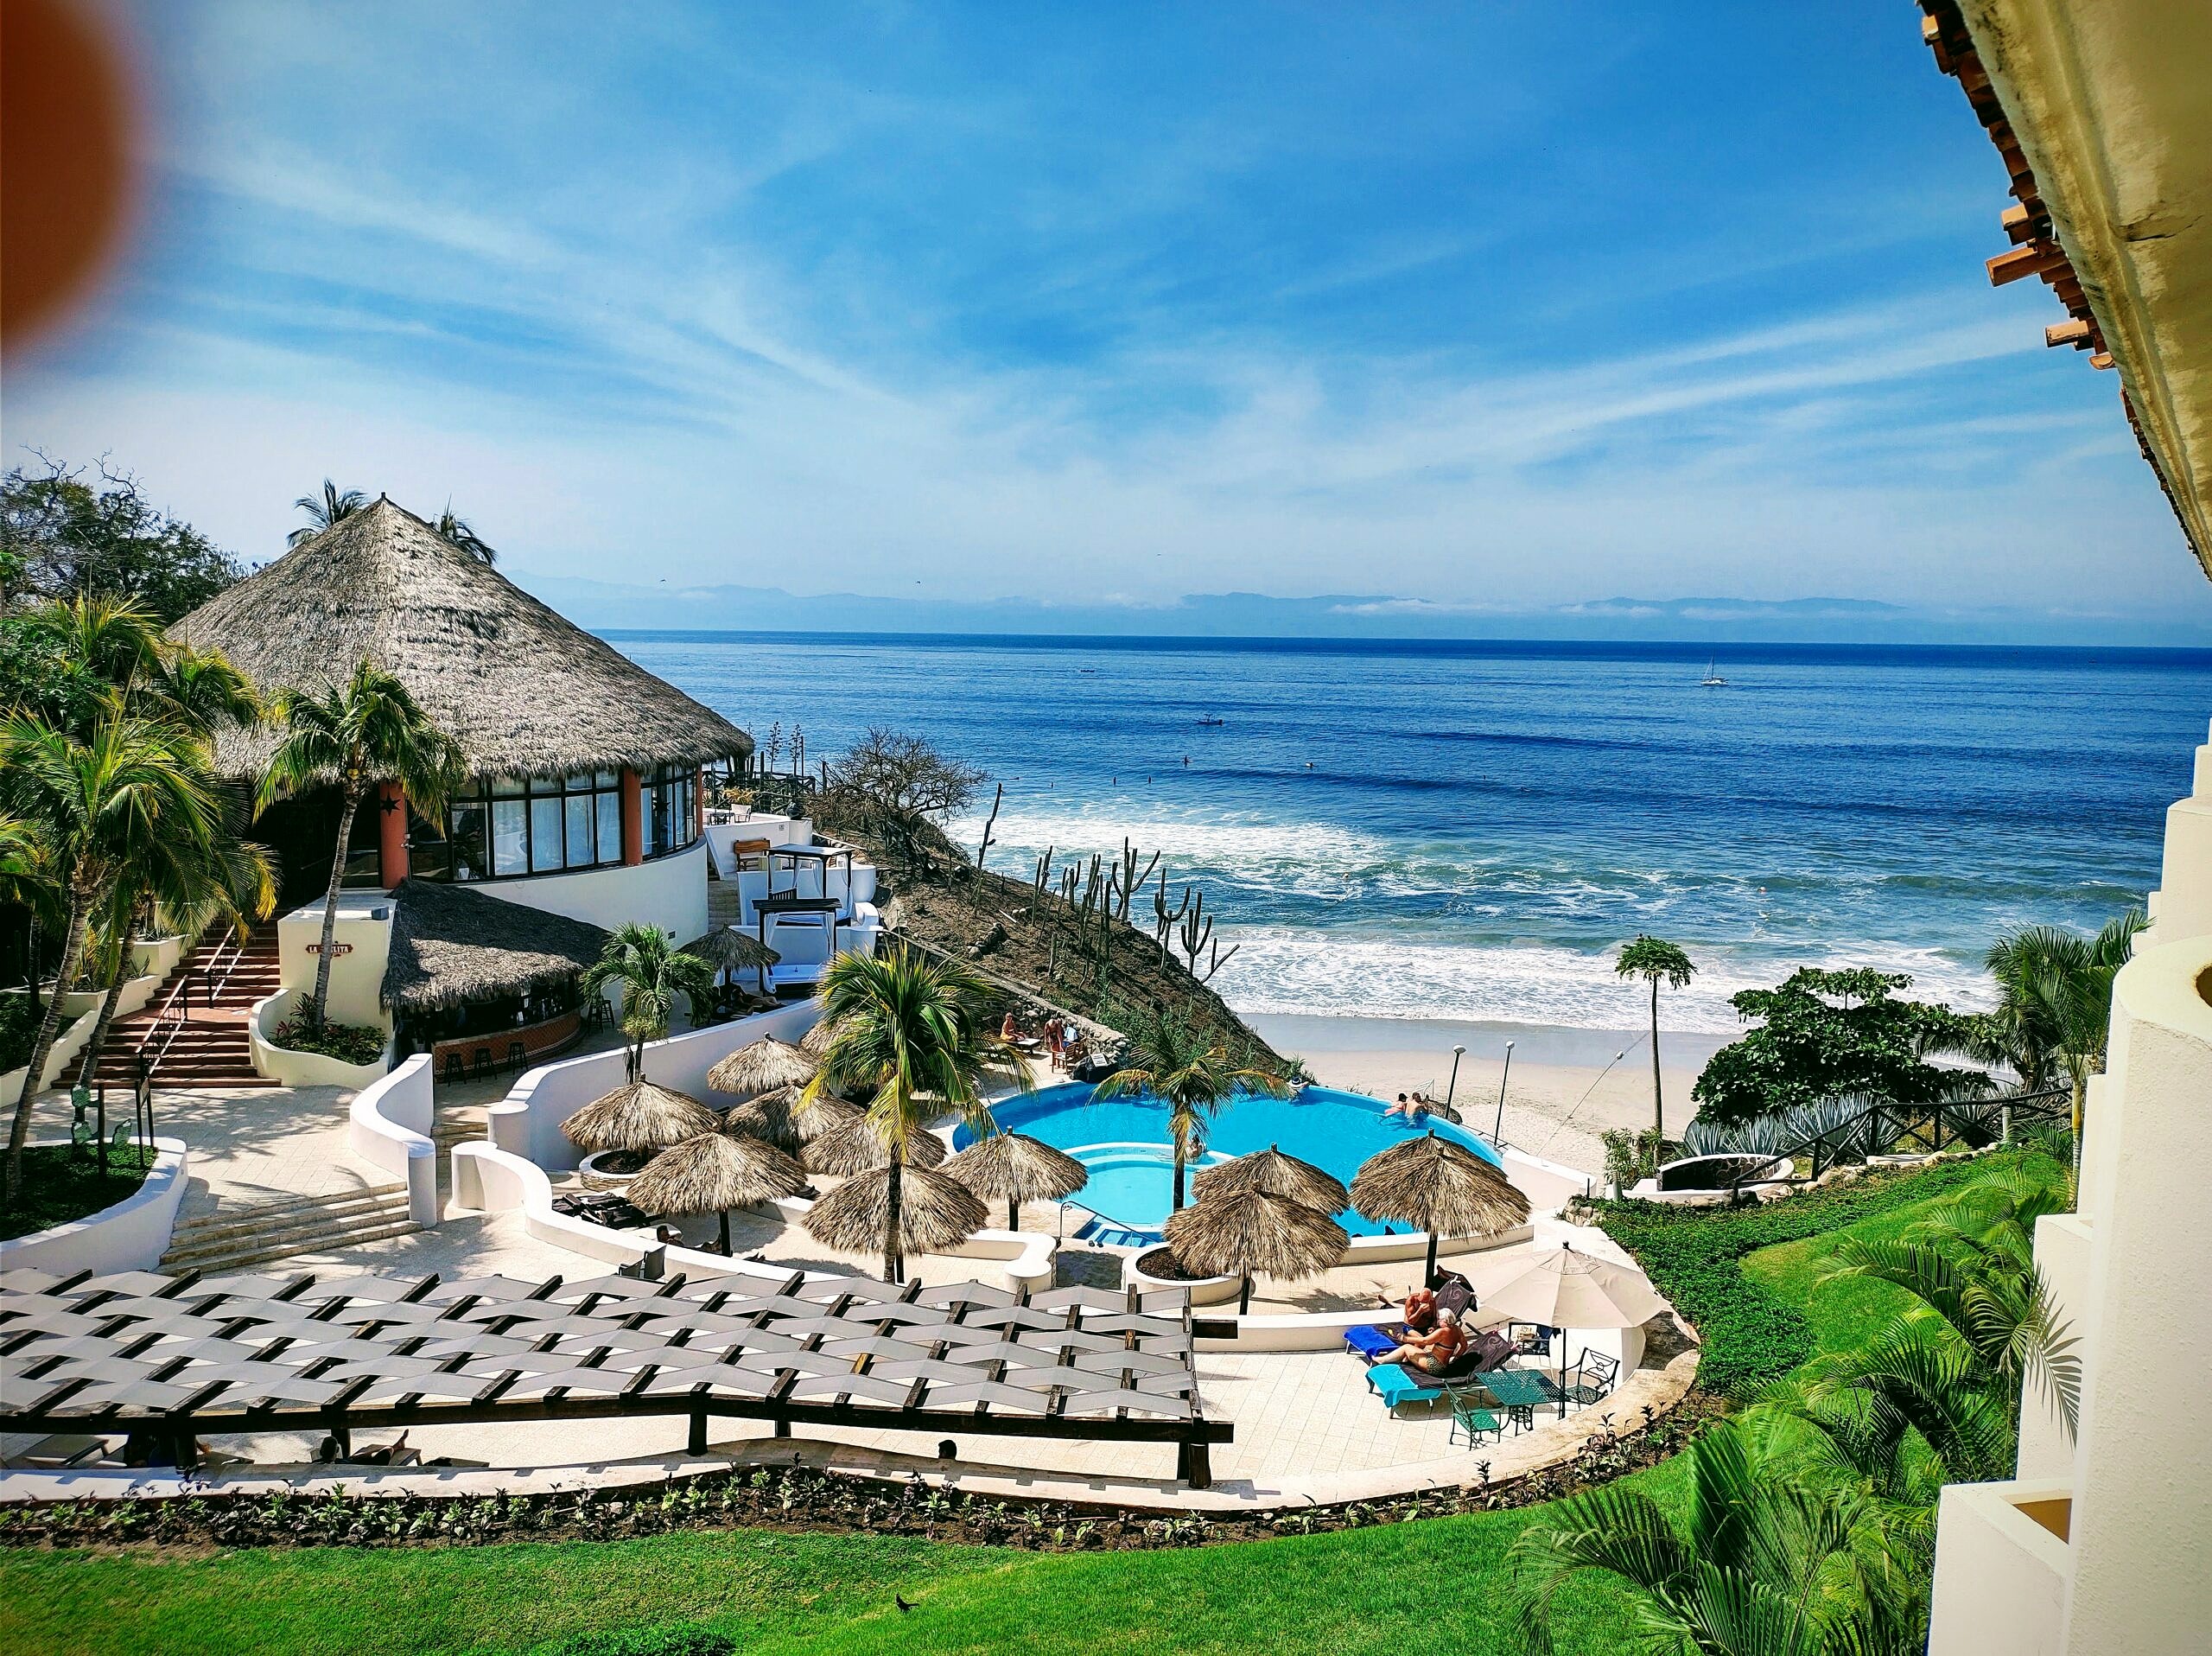 View of Adult Pool from Grand Palladium Resort in Puerto Vallarta